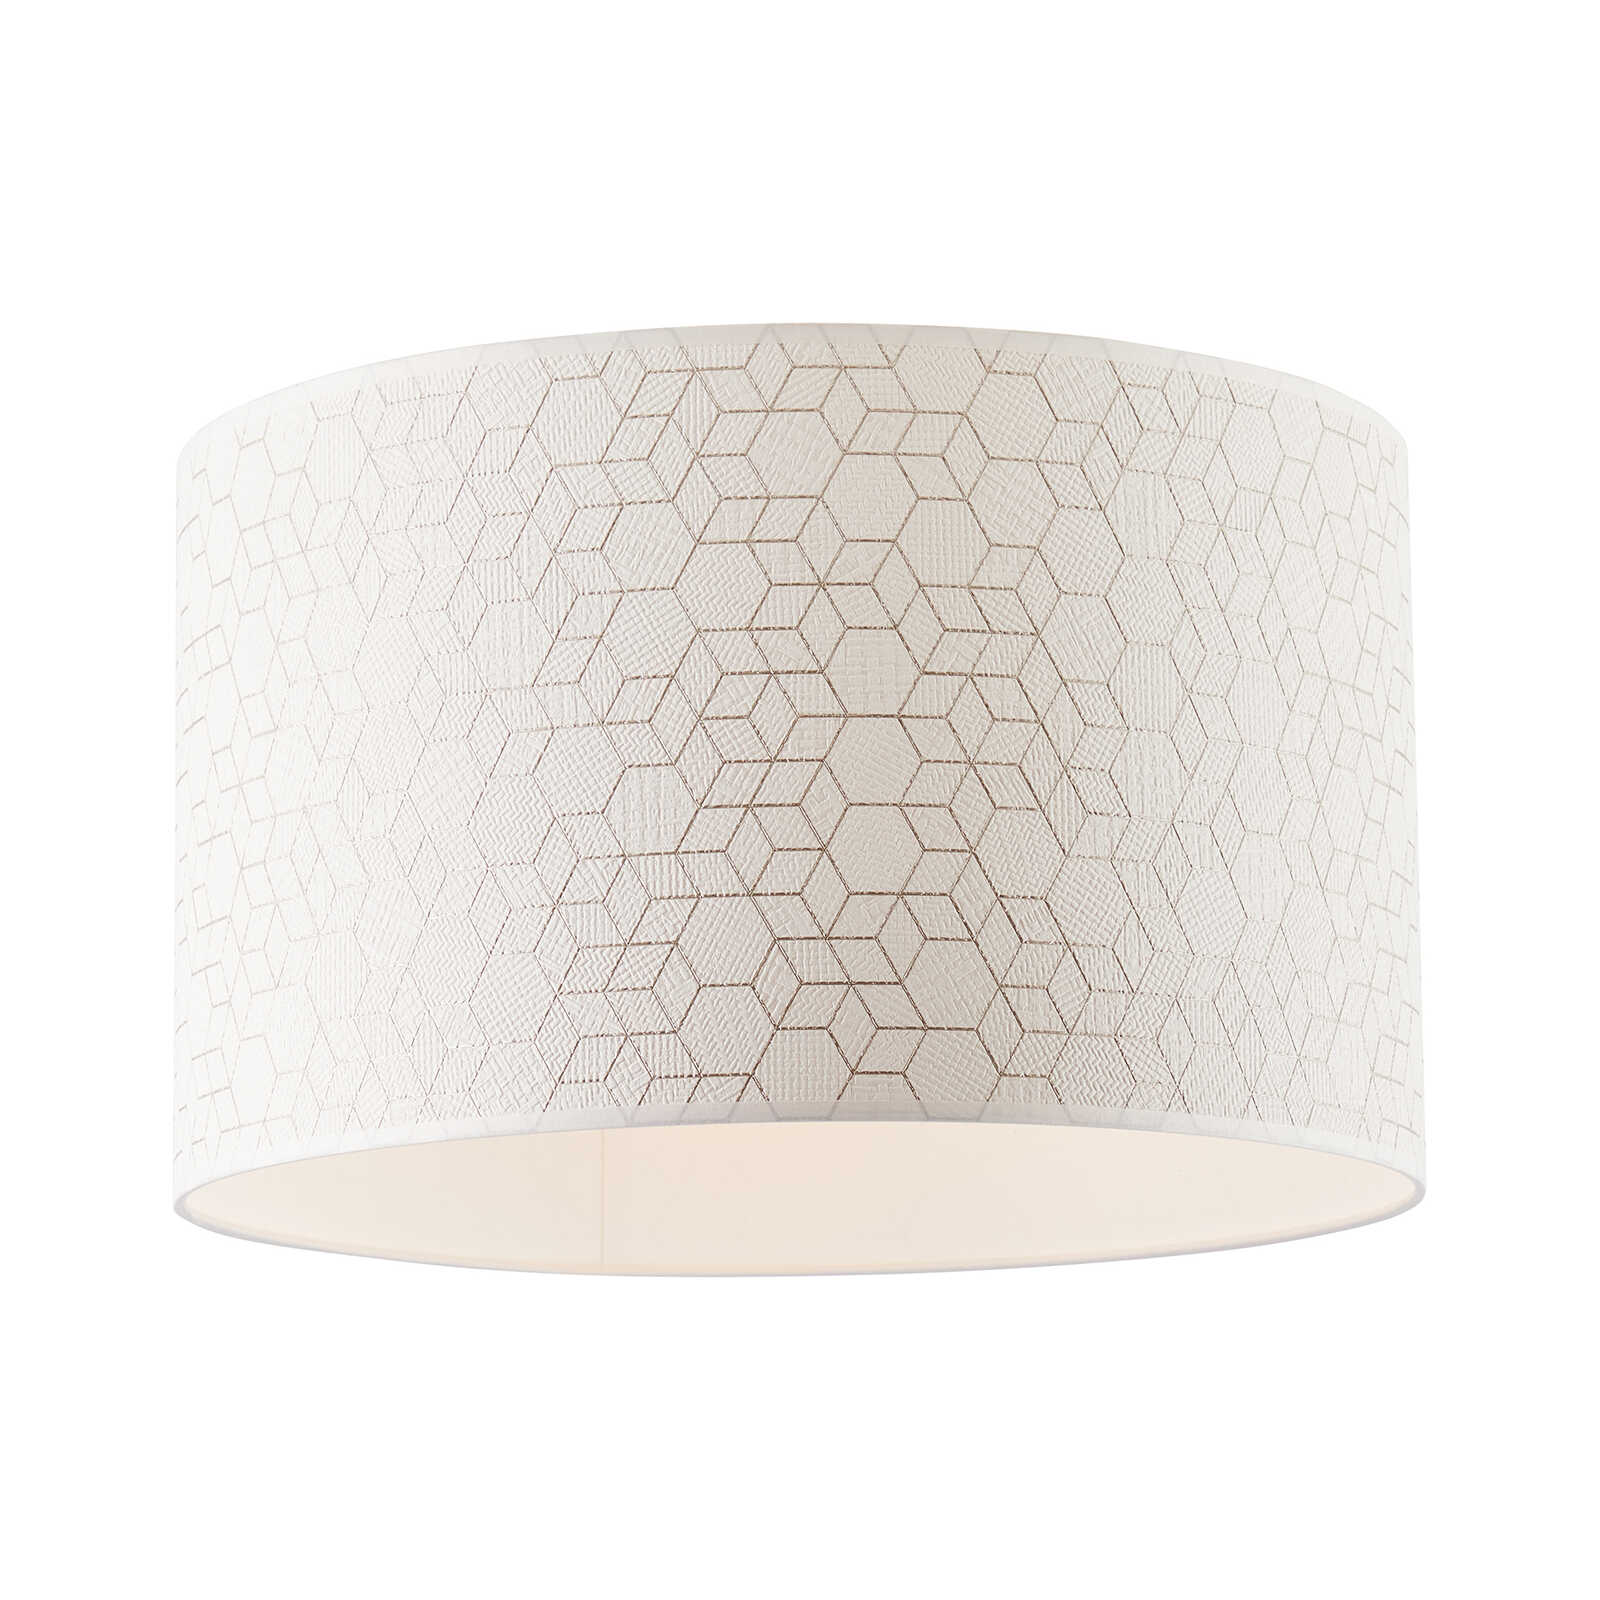 Textile ceiling light - Hannes 6 - White
